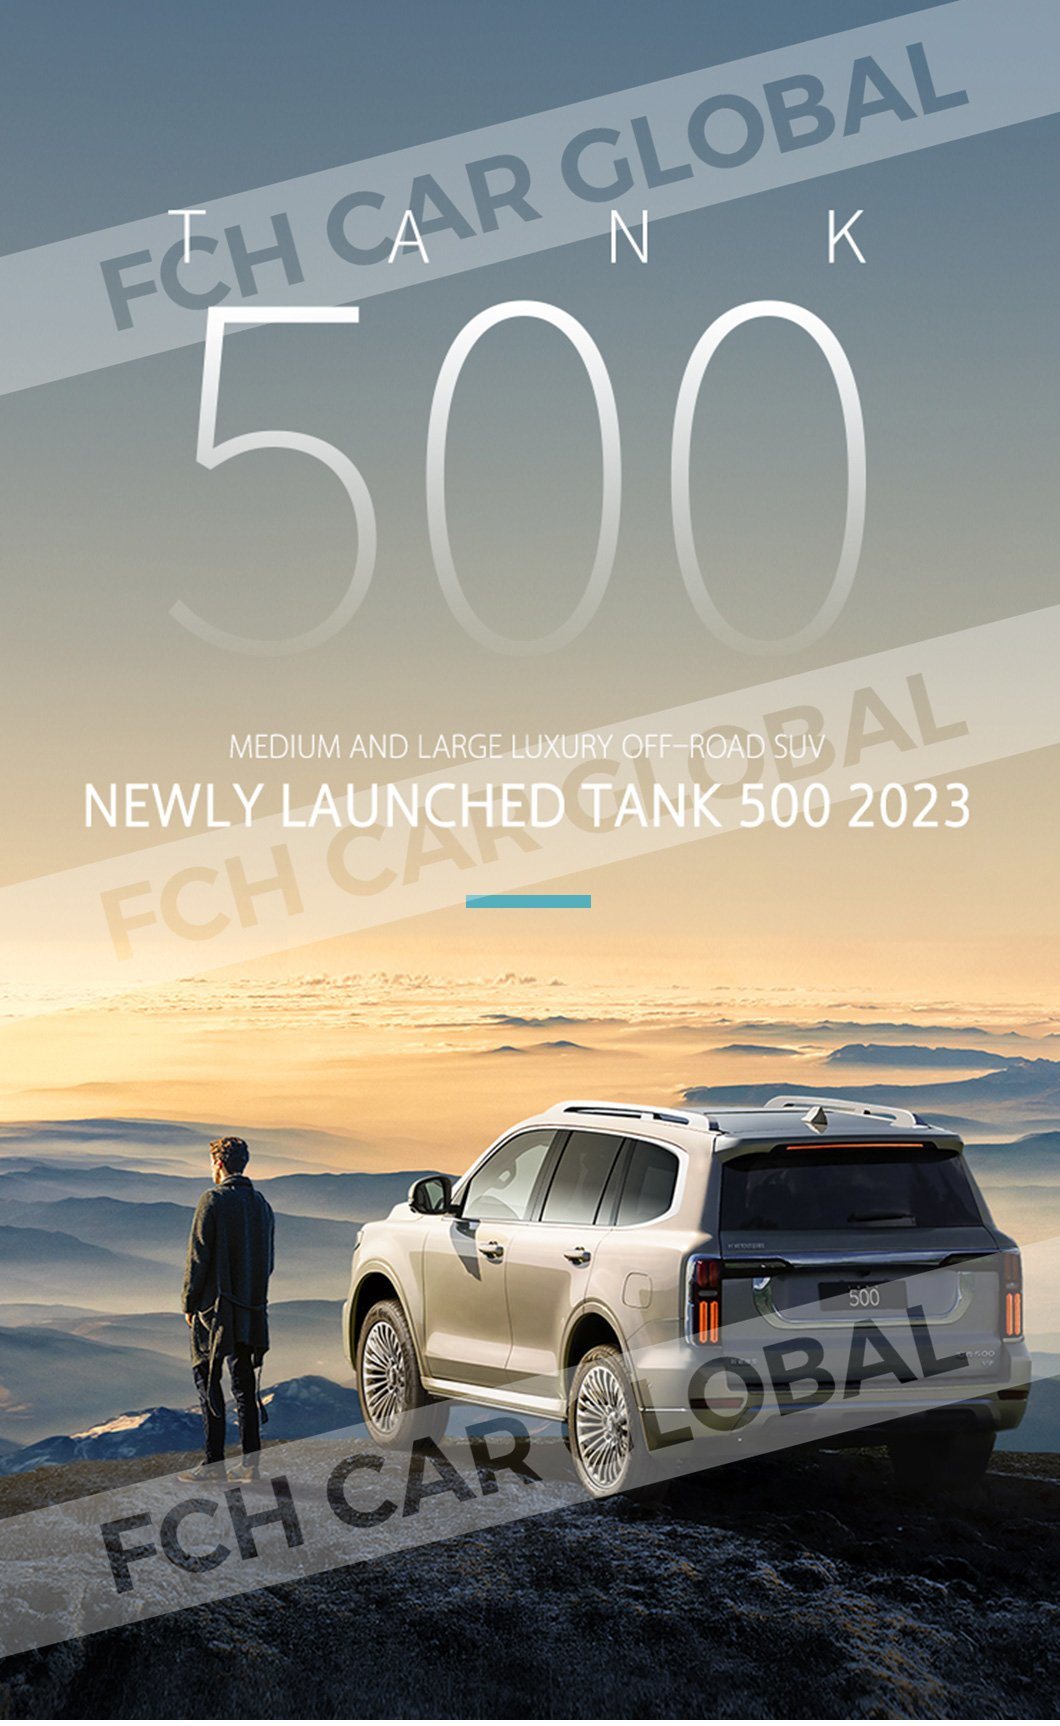 Gwm Tank 500 Bluetooth Key Car 4WD 3.0t 360 HP V6 High Performance 7 Seat Large SUV New Energy Vehicles with 48V Hybrid System